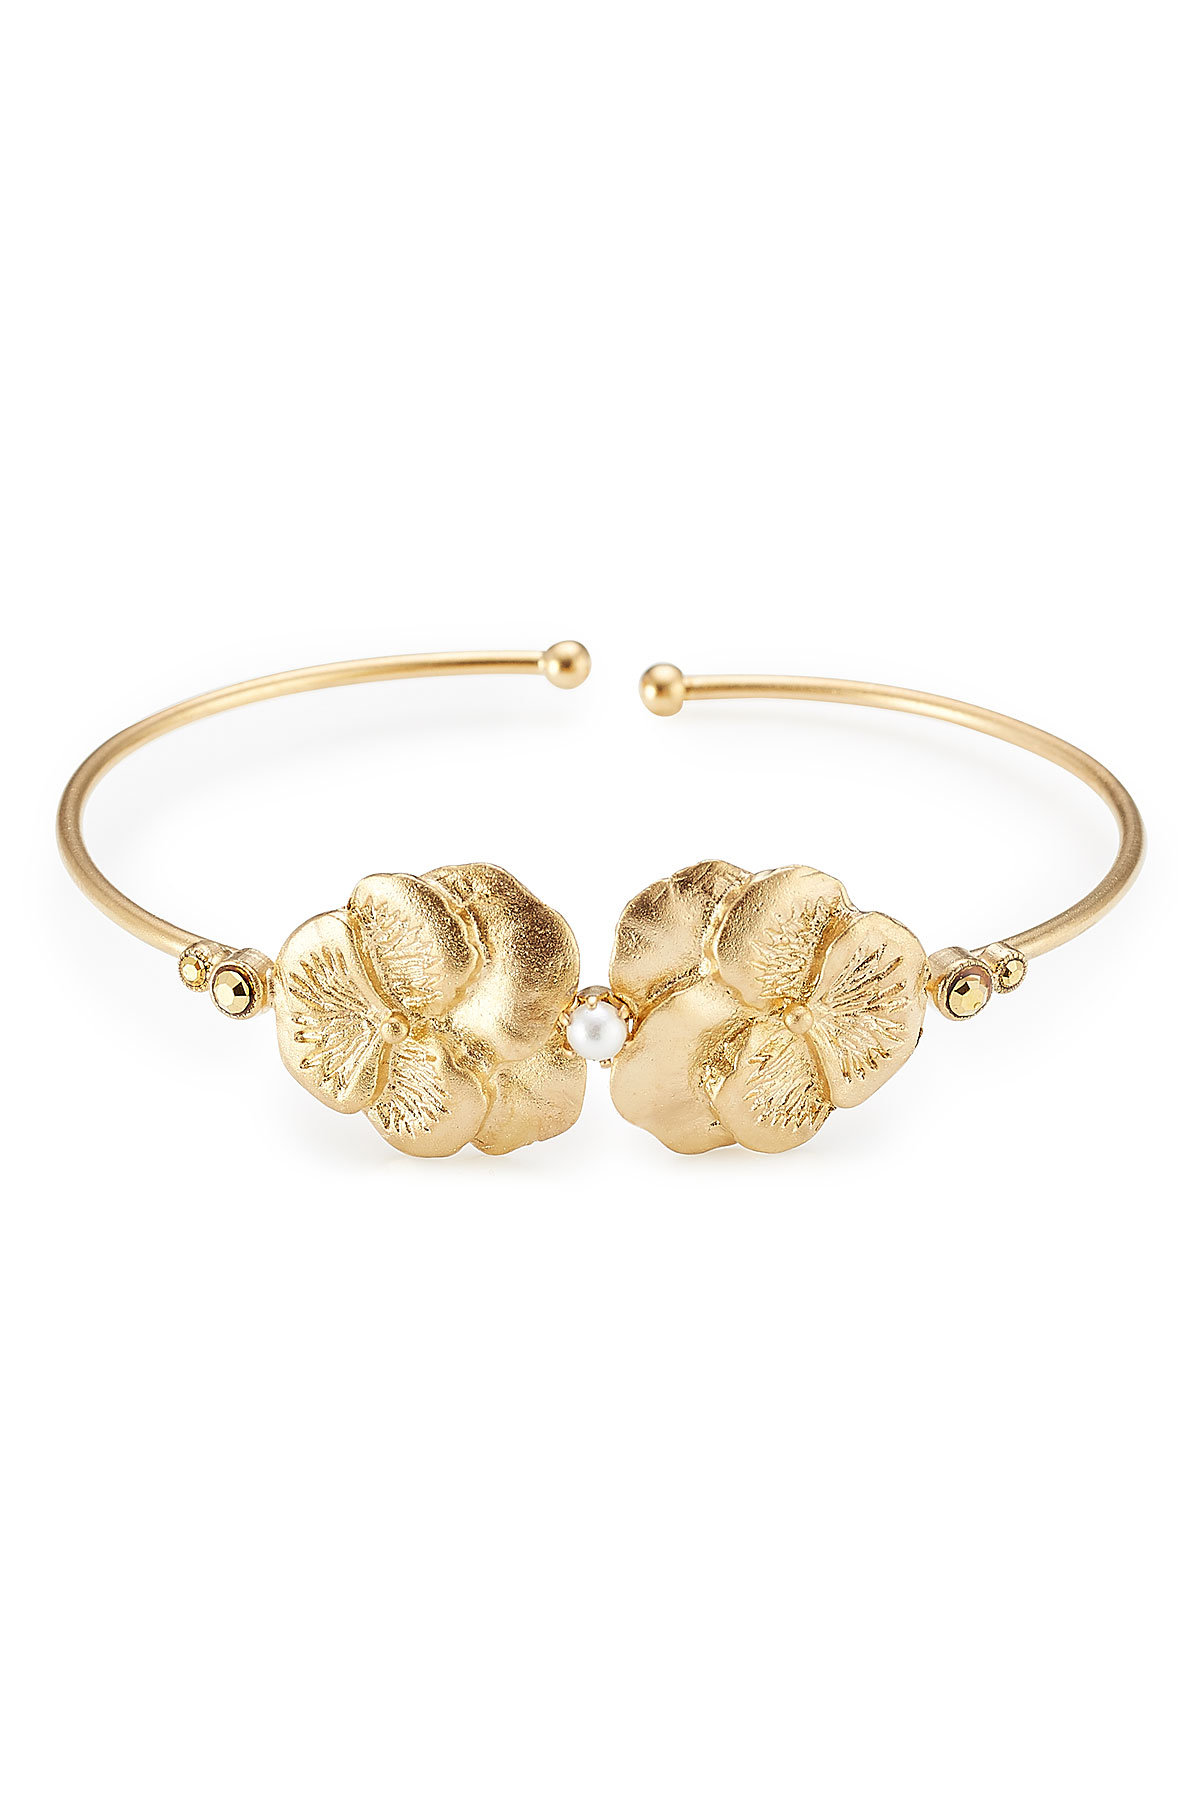 Gas Bijoux - Pensée 24kt Gold-Plated Bracelet